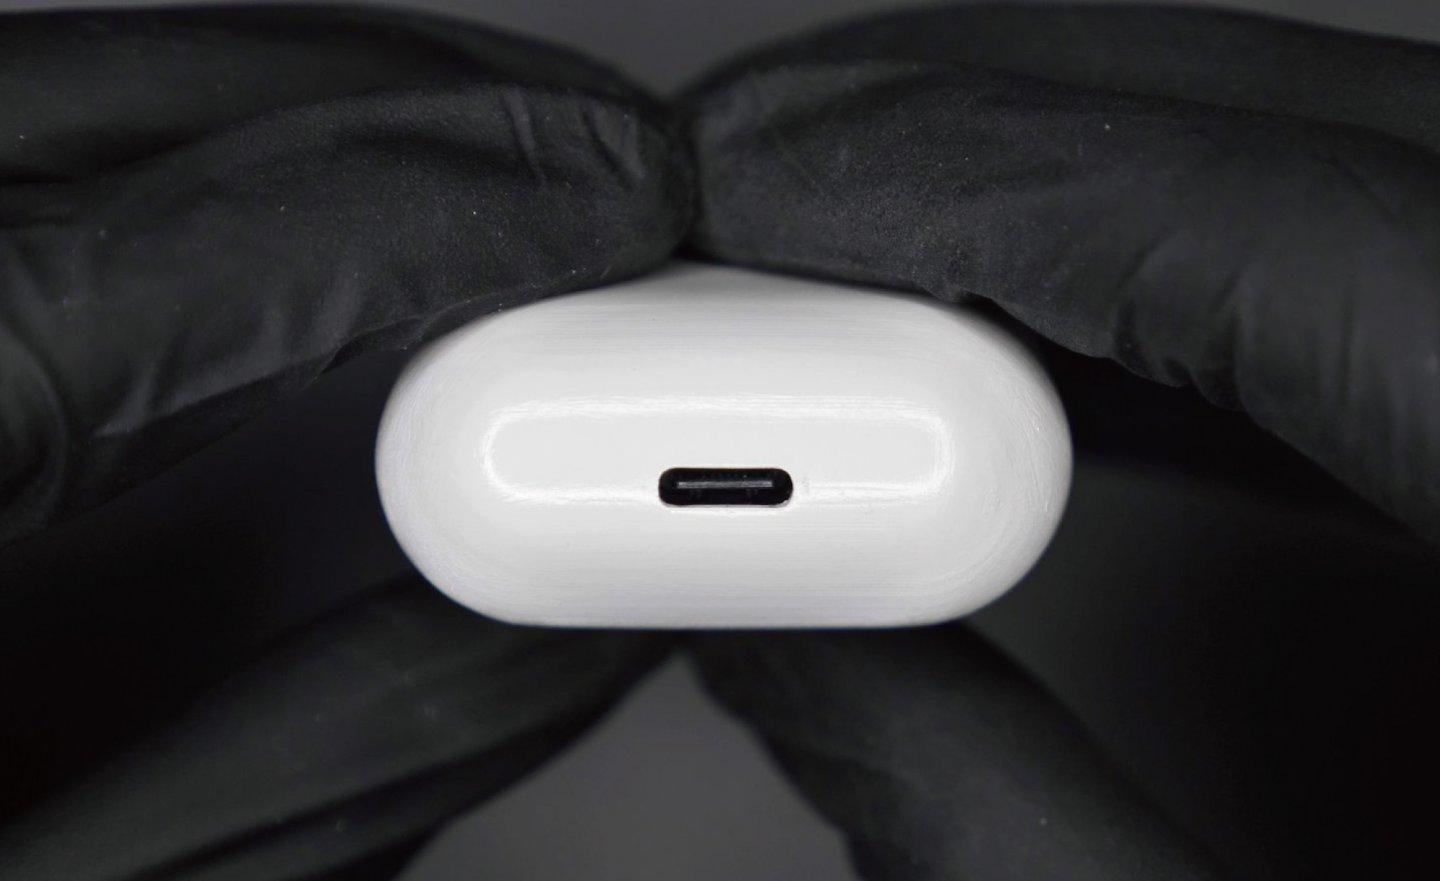 AirPods 充電盒可以 DIY 了！瑞士碩士生公開 3D 列印製作圖，還把連接埠變成 USB-C